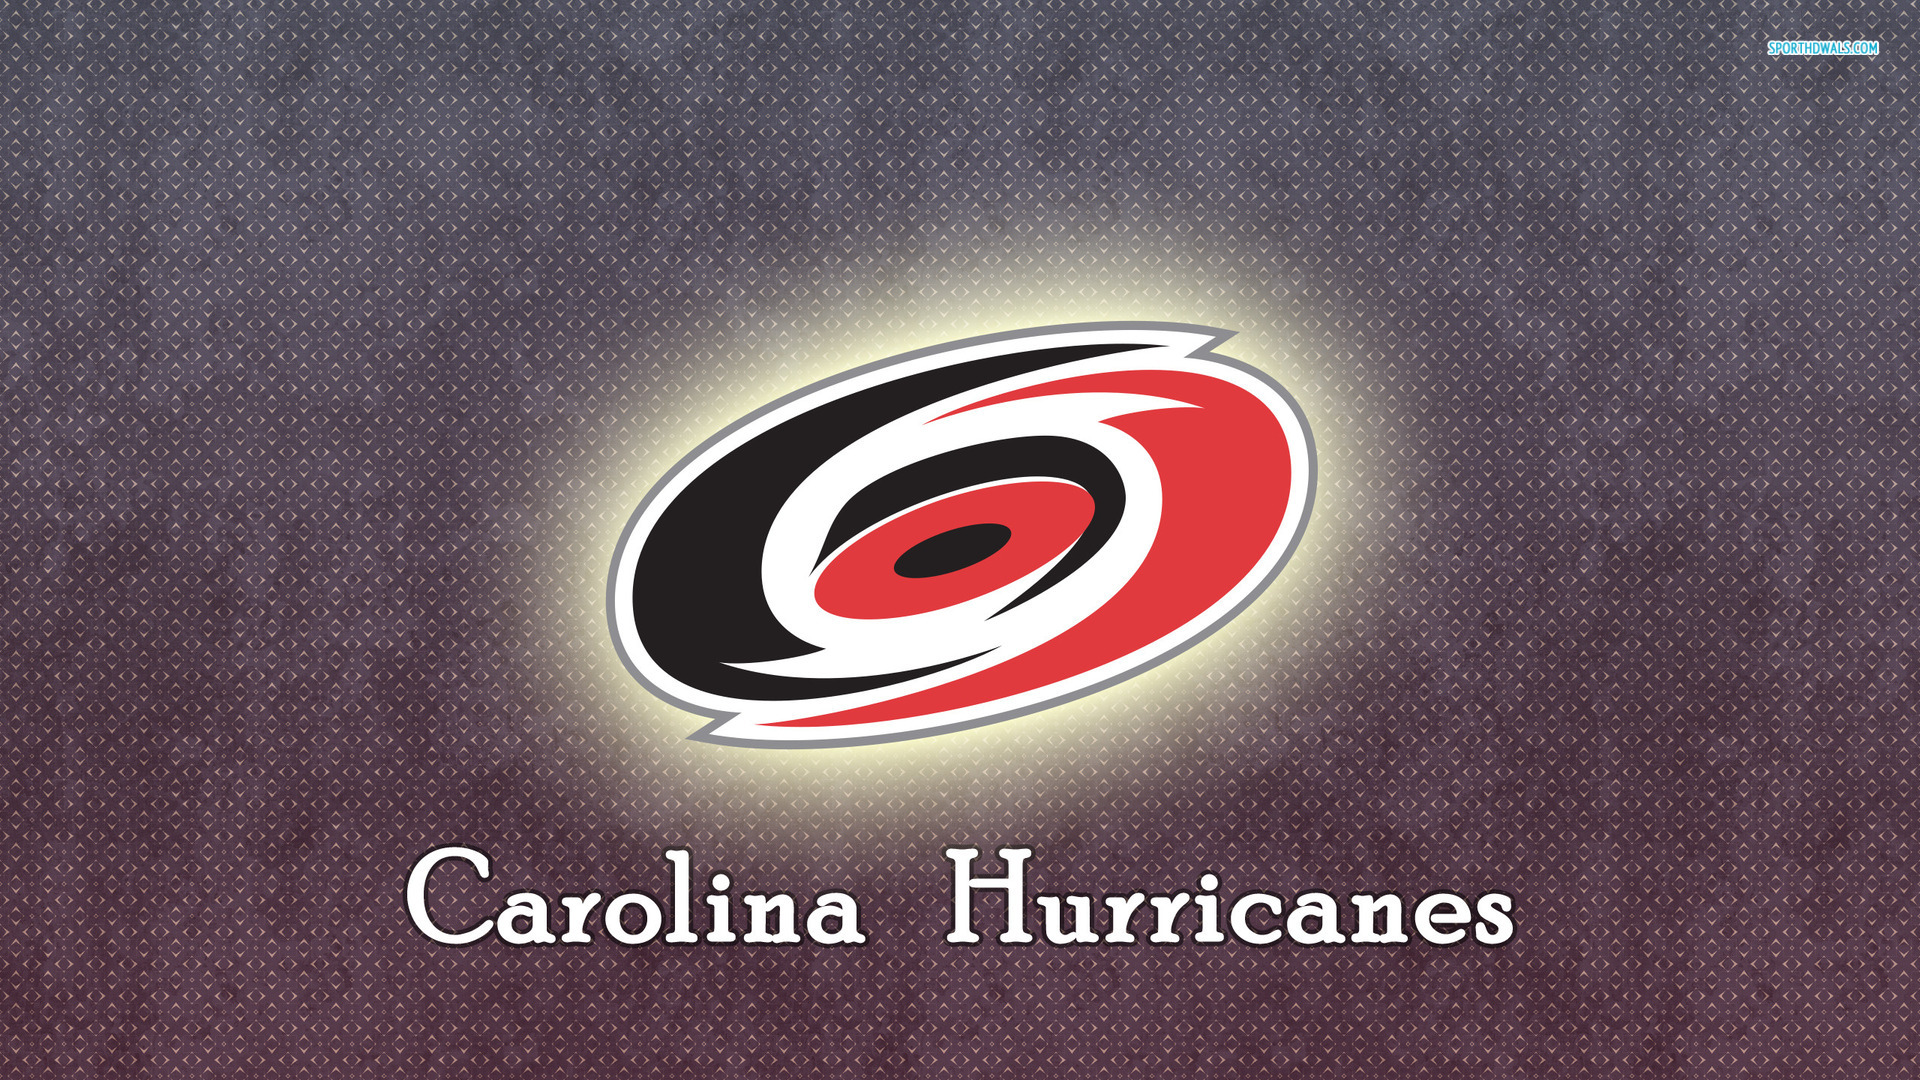 Carolina Hurricanes, 1920x1080 HD Wallpaper and FREE Stock Photo